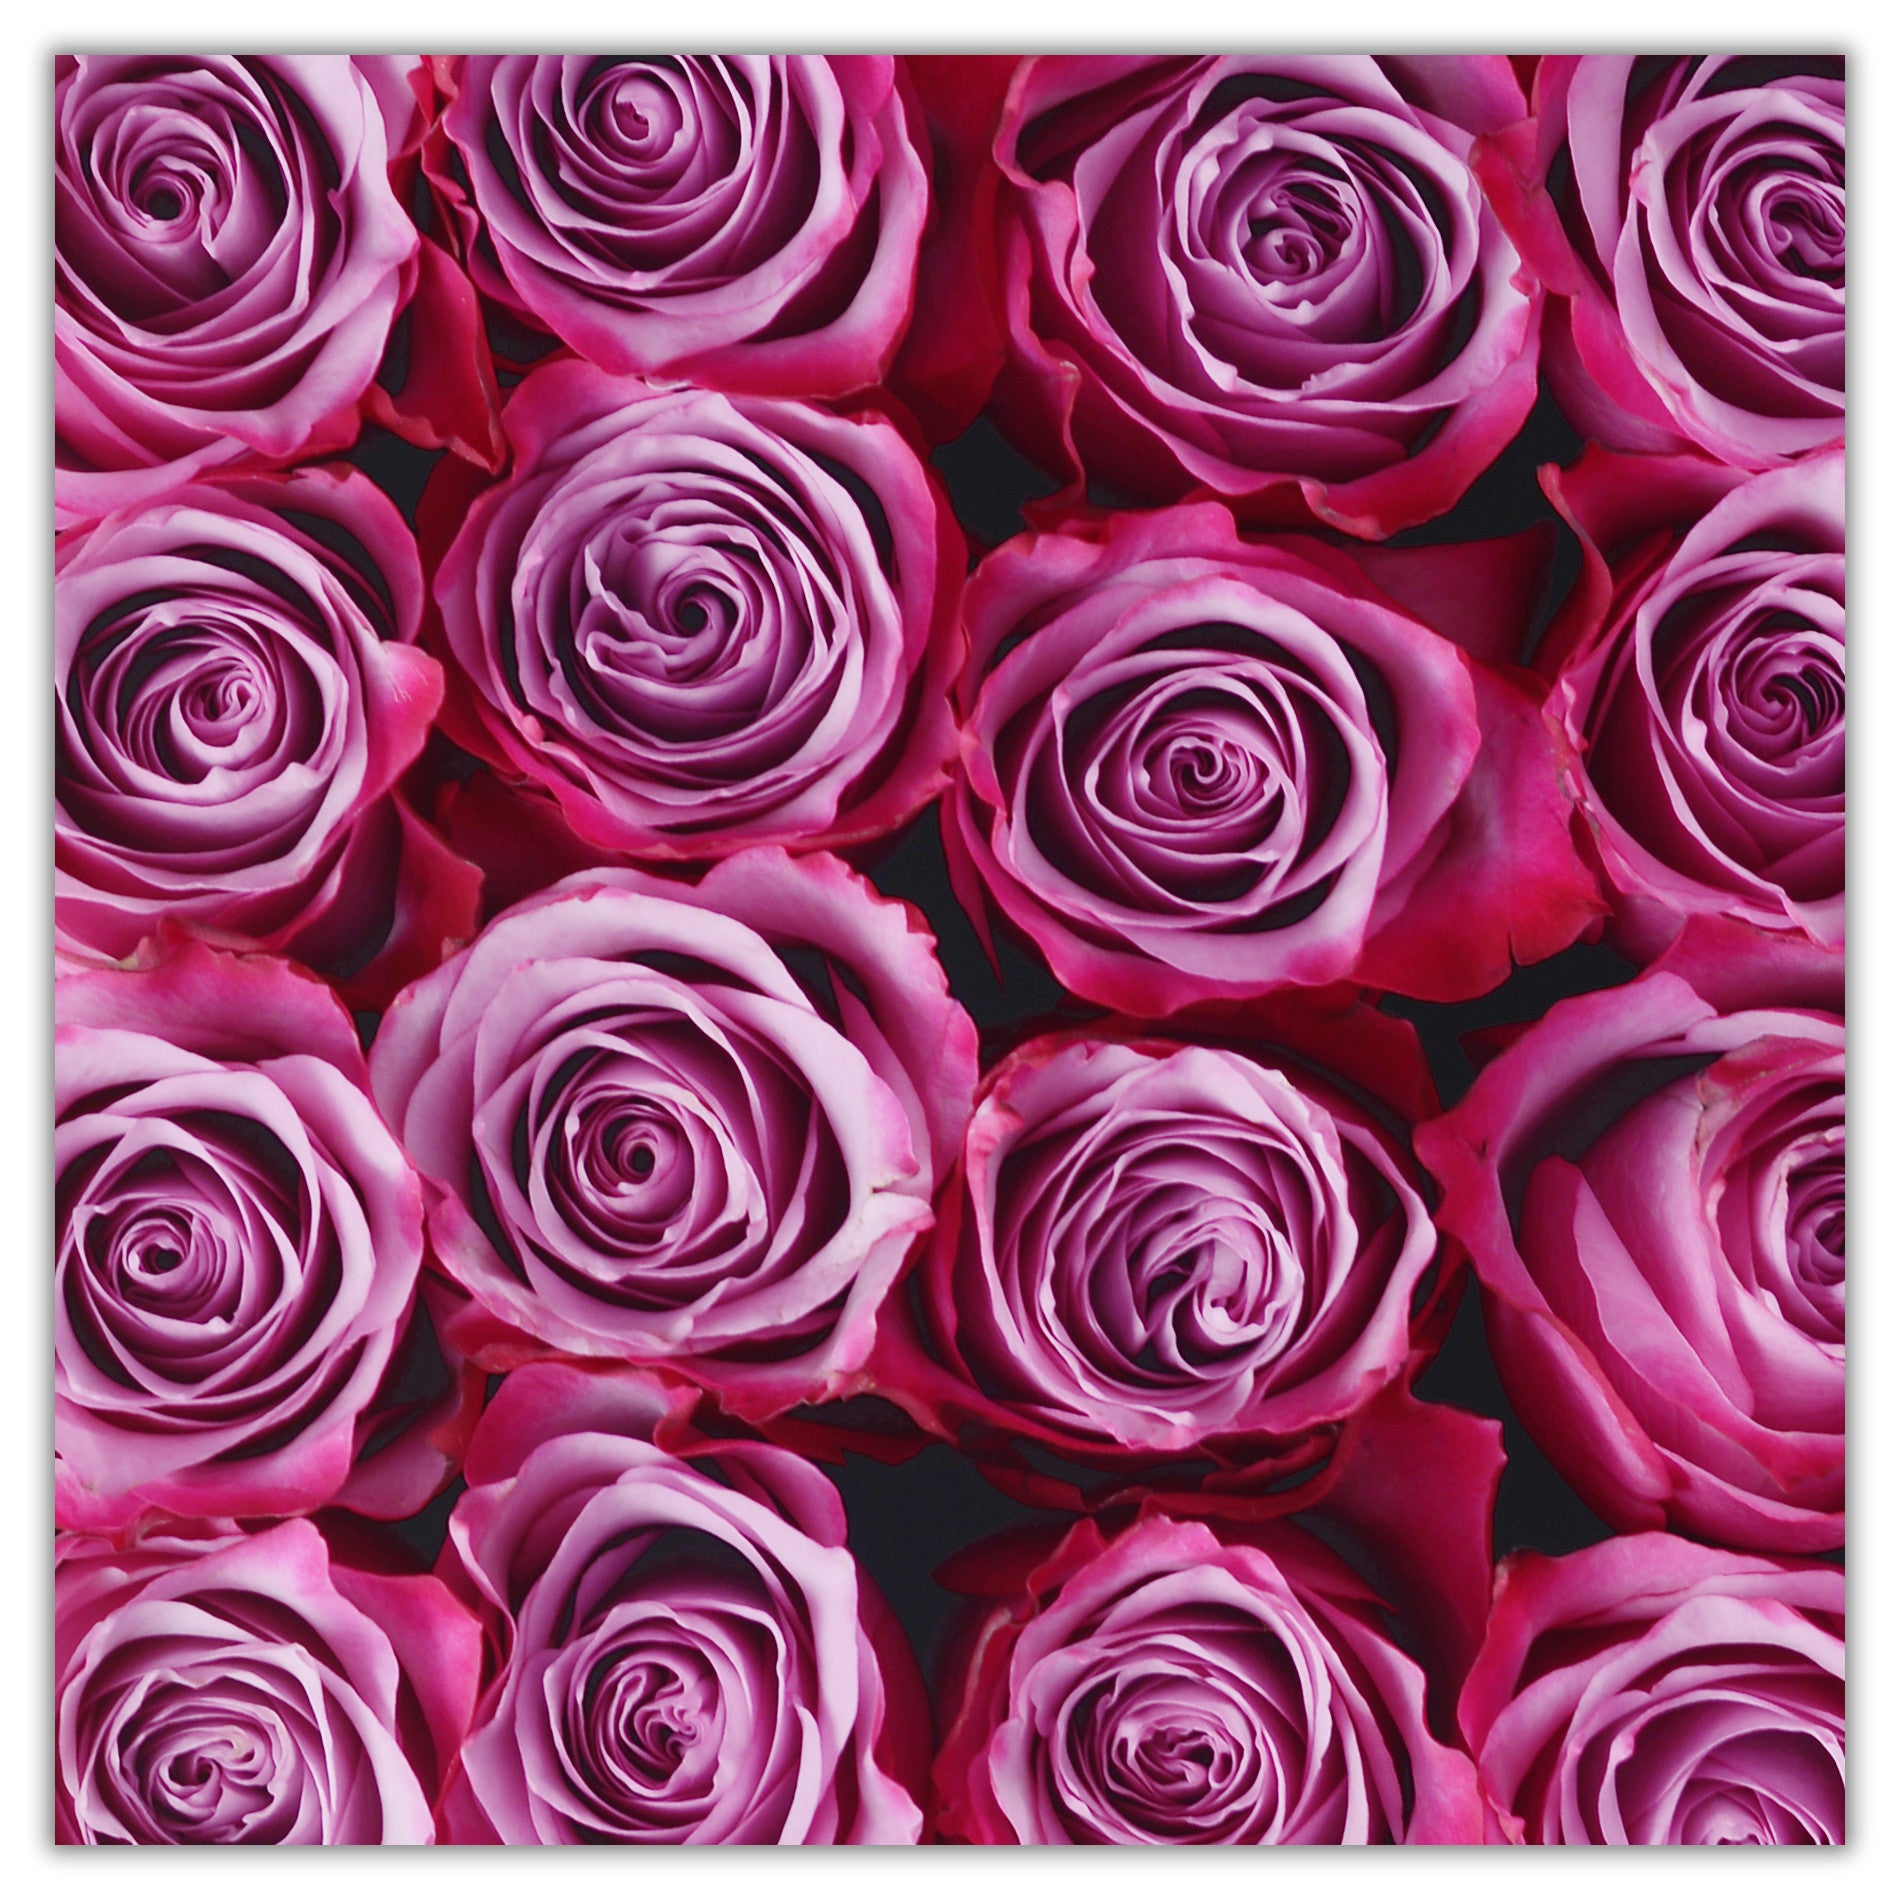 Cube - Deep Purple Roses - White Box - The Million Roses Budapest